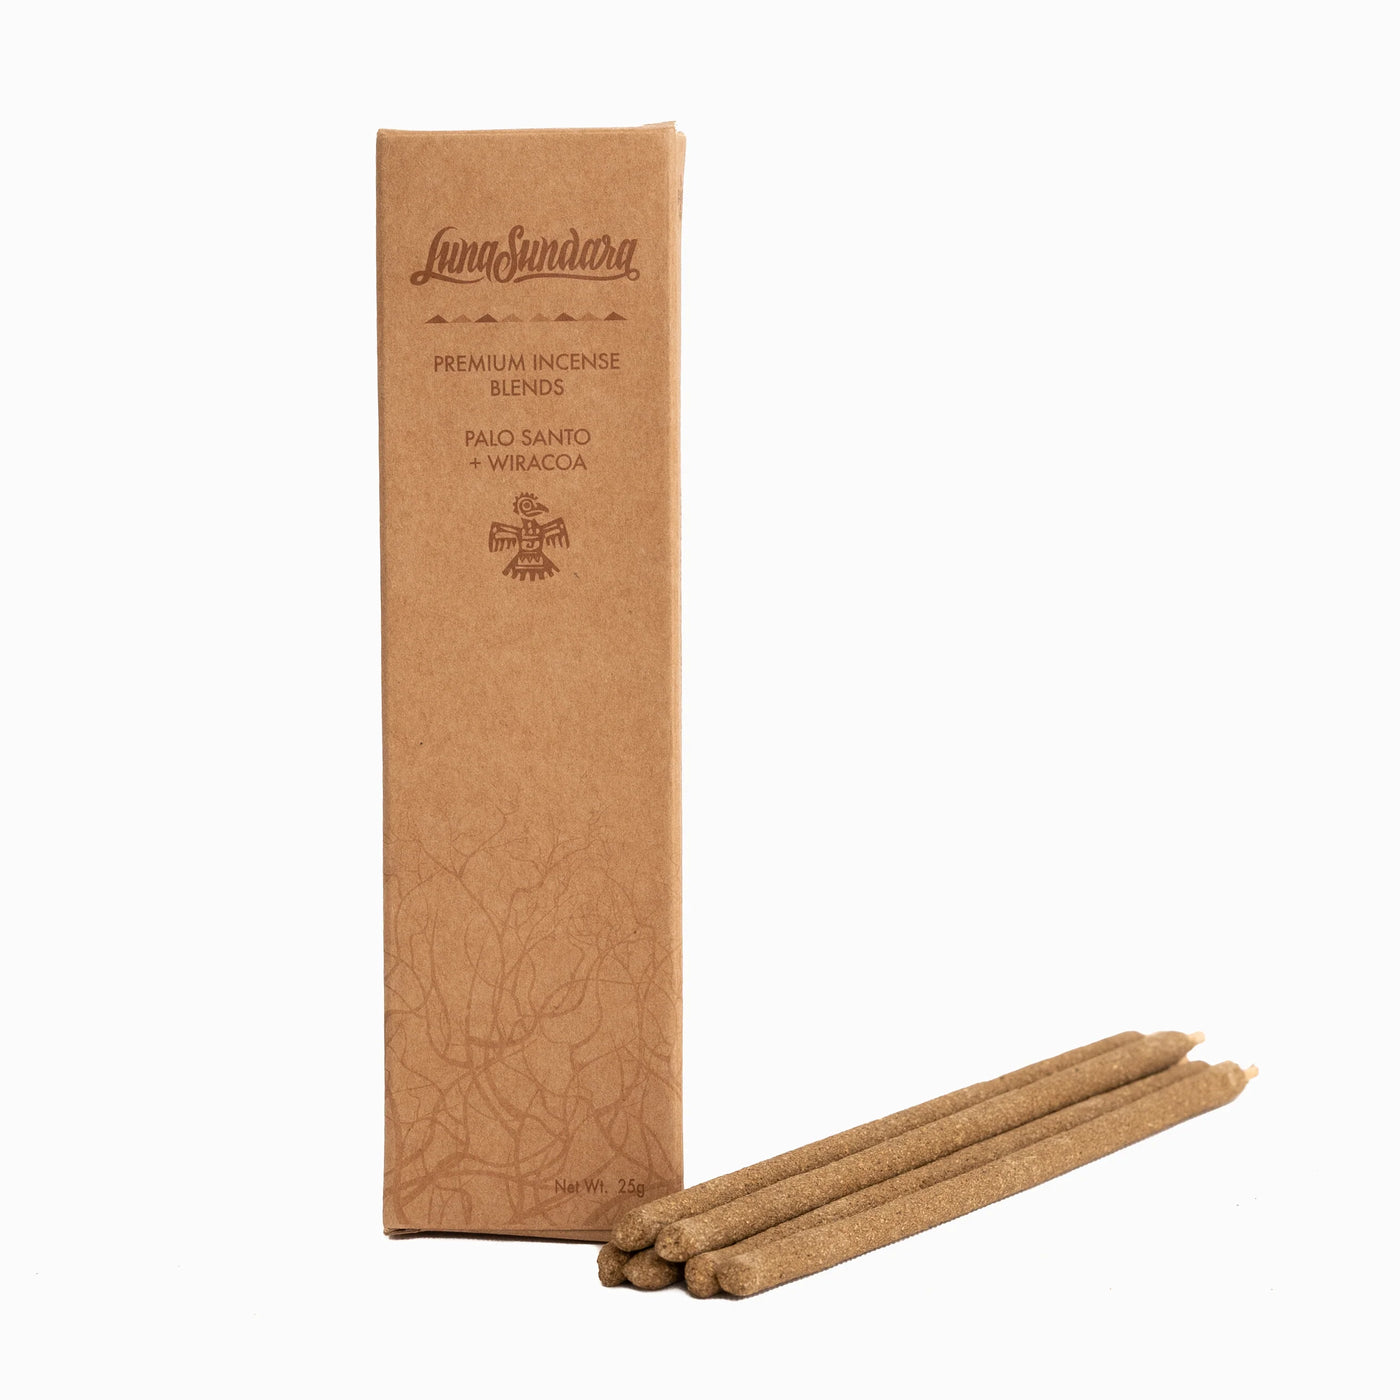 Palo Santo & Wiracoa Hand-Rolled Incense Sticks